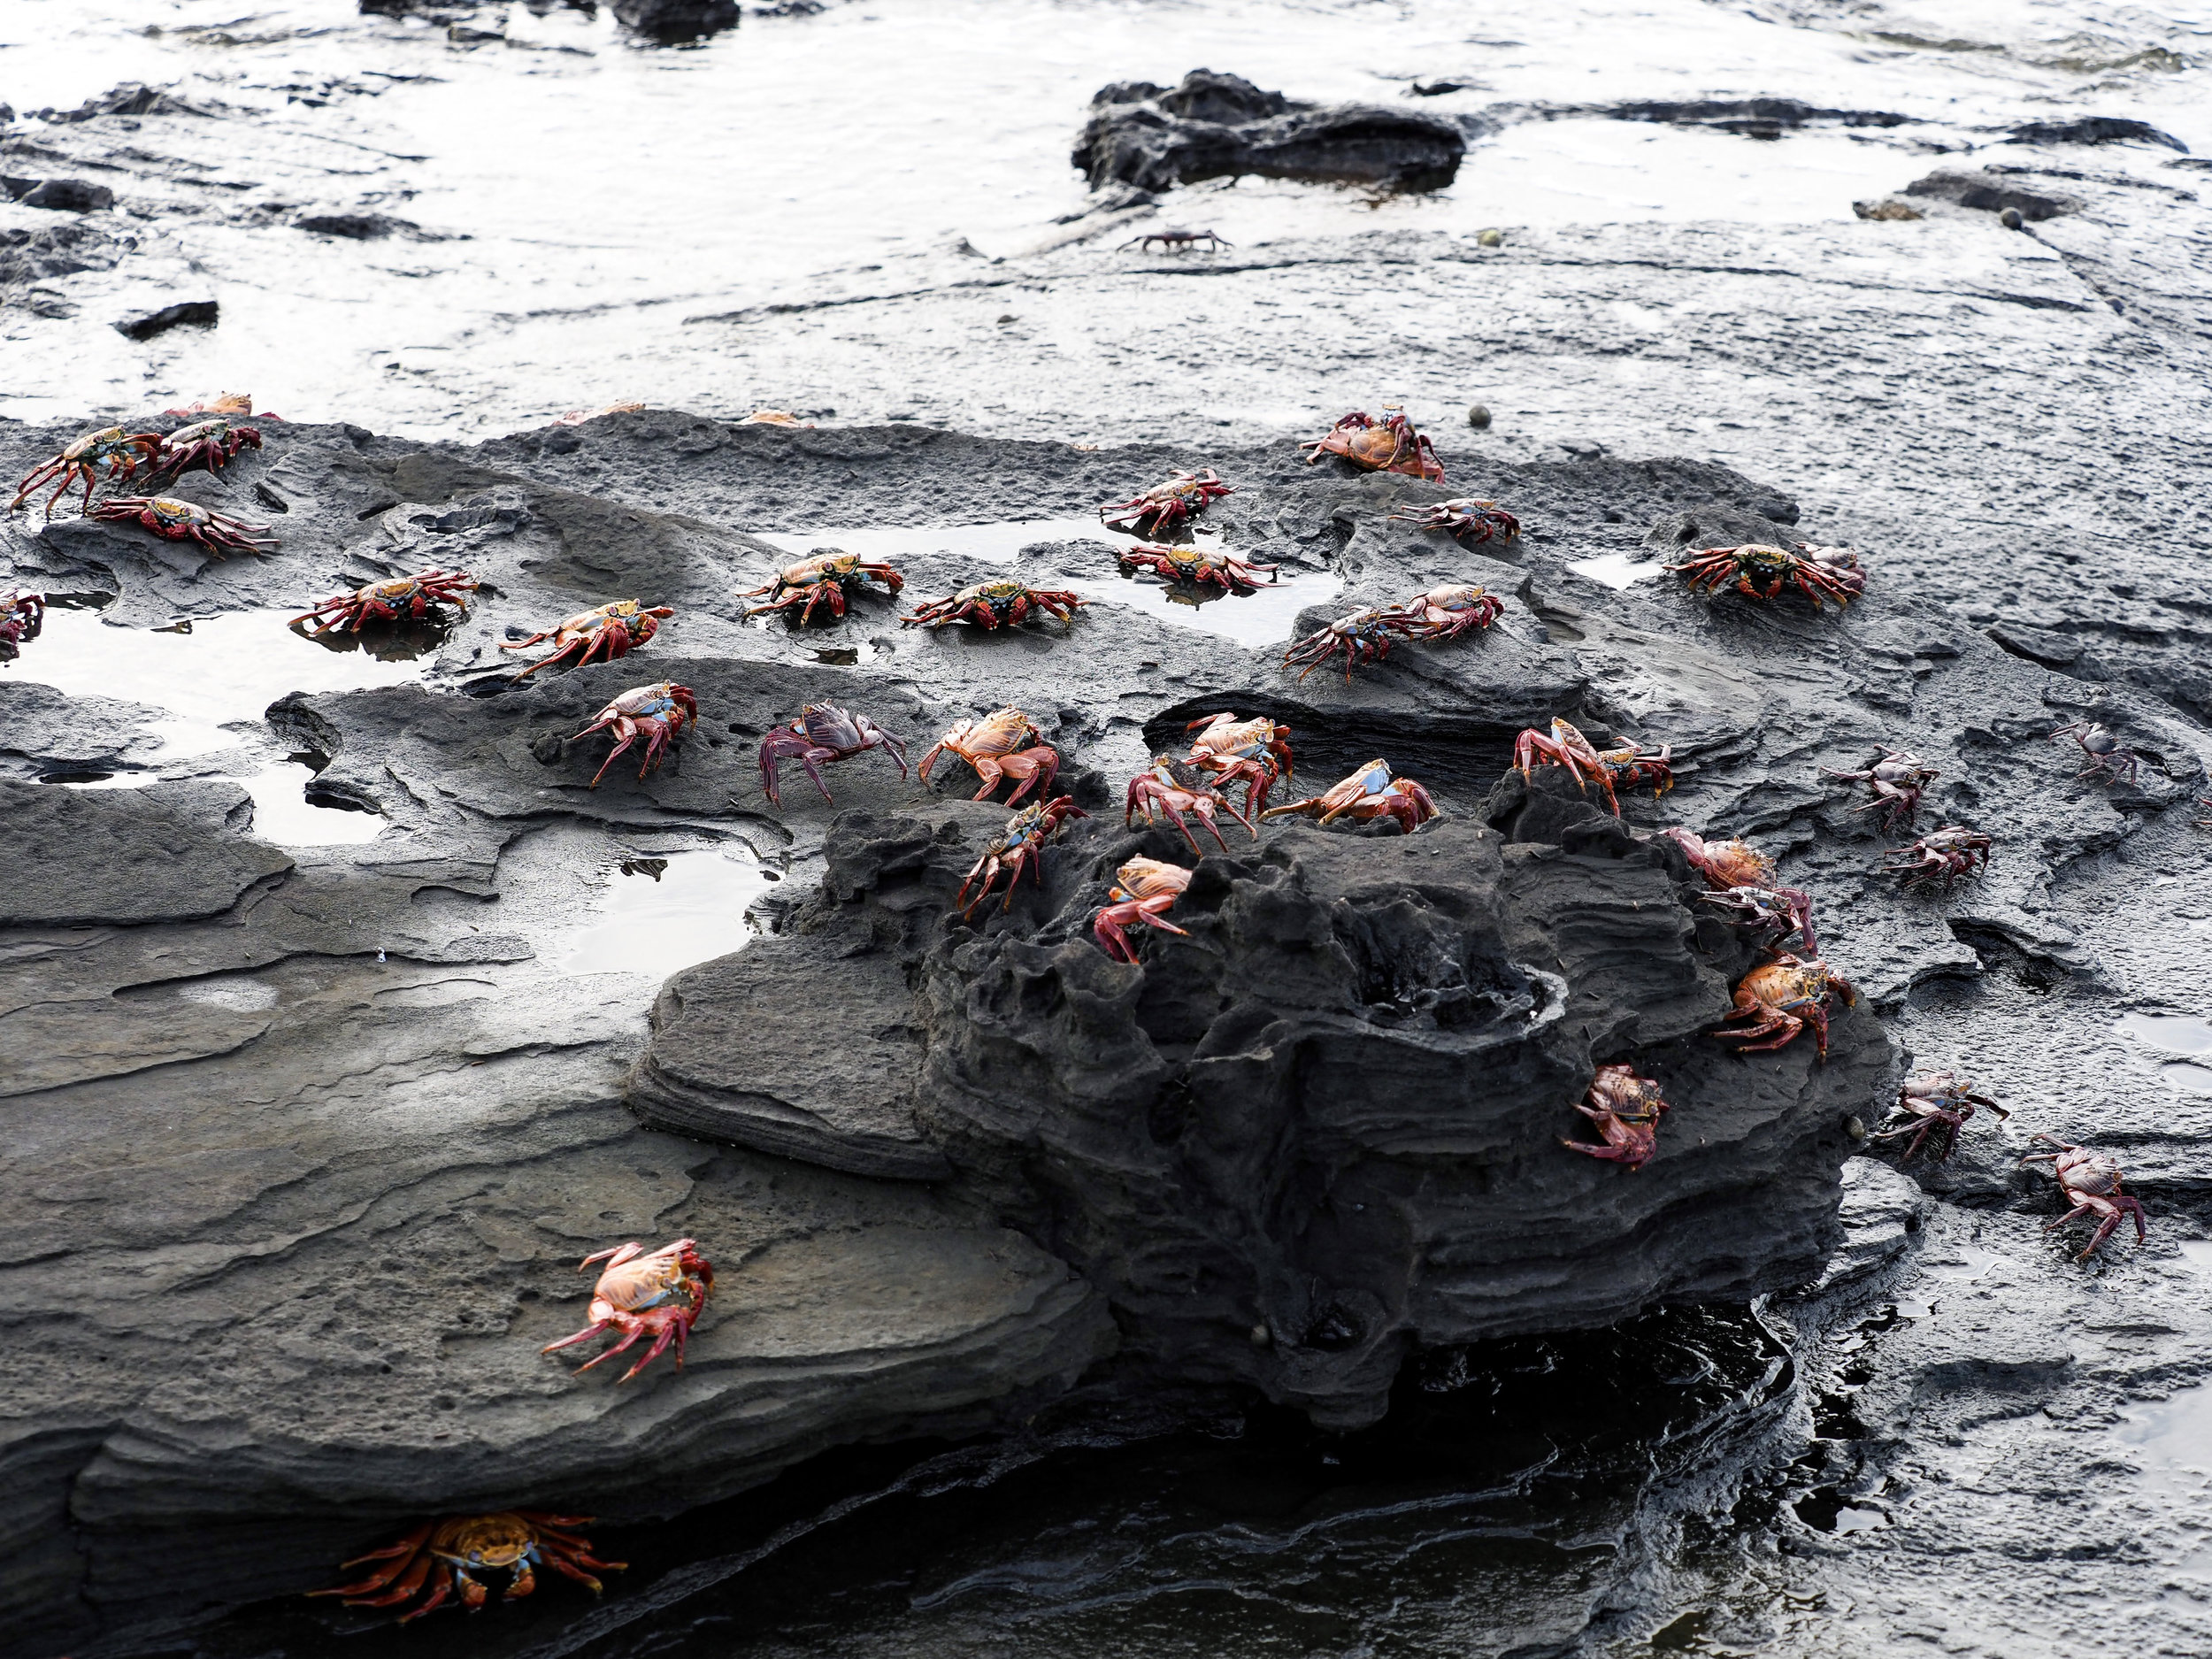  Sally Lightfoot crabs, Sullivan Bay, Santiago Island 